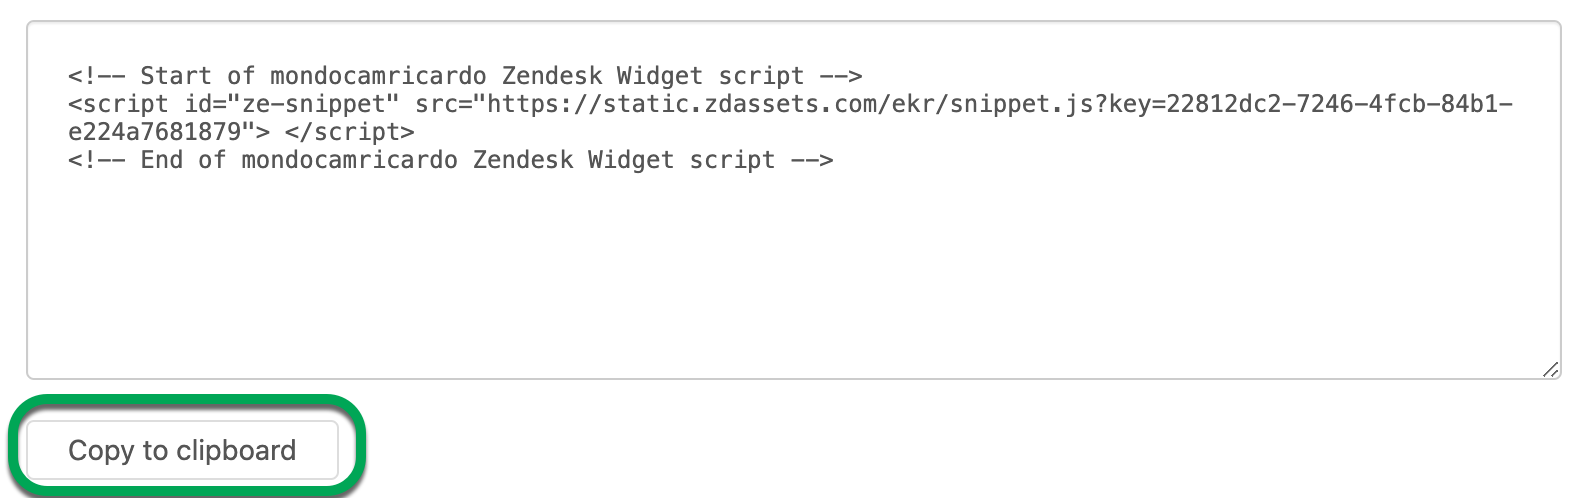 Web-Widget-Skript